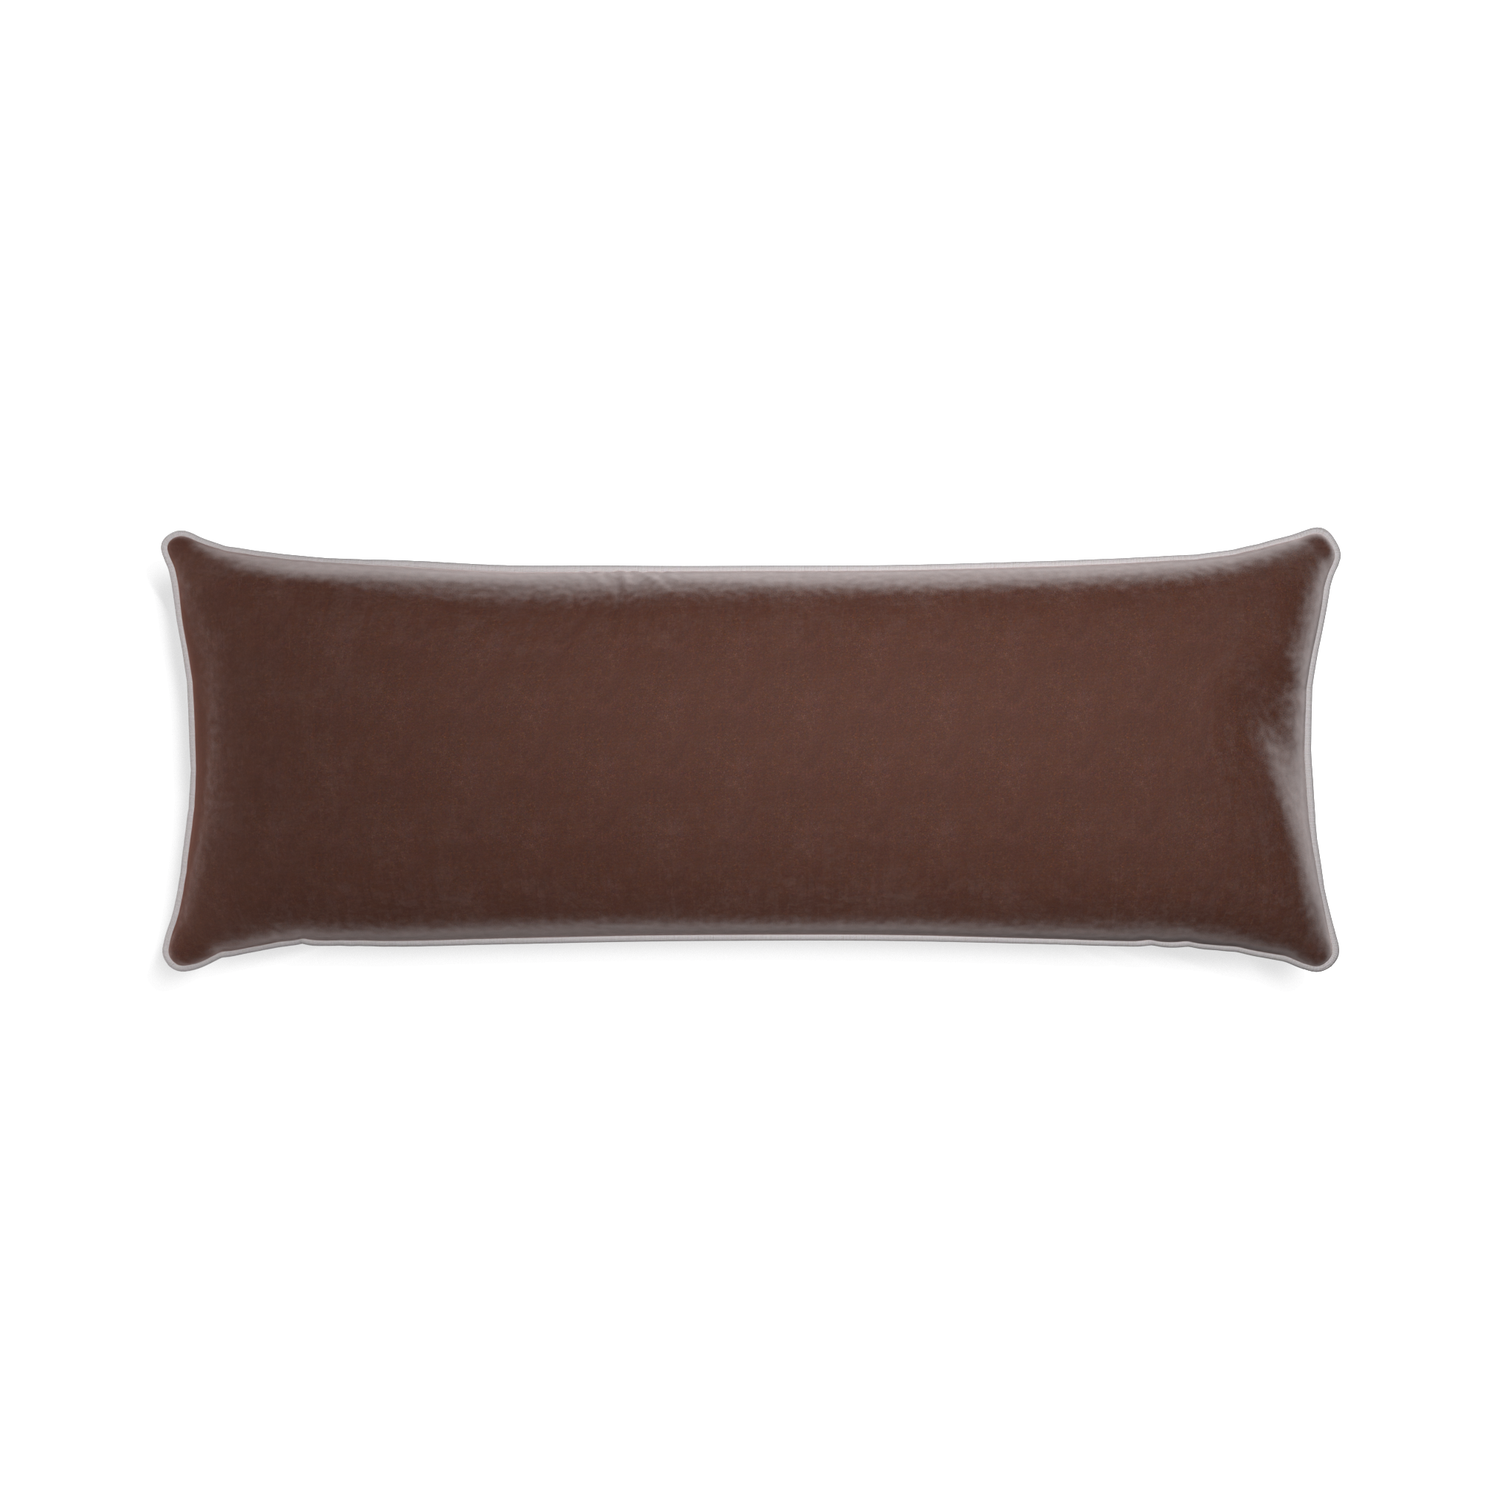 Xl-lumbar walnut velvet custom pillow with pebble piping on white background